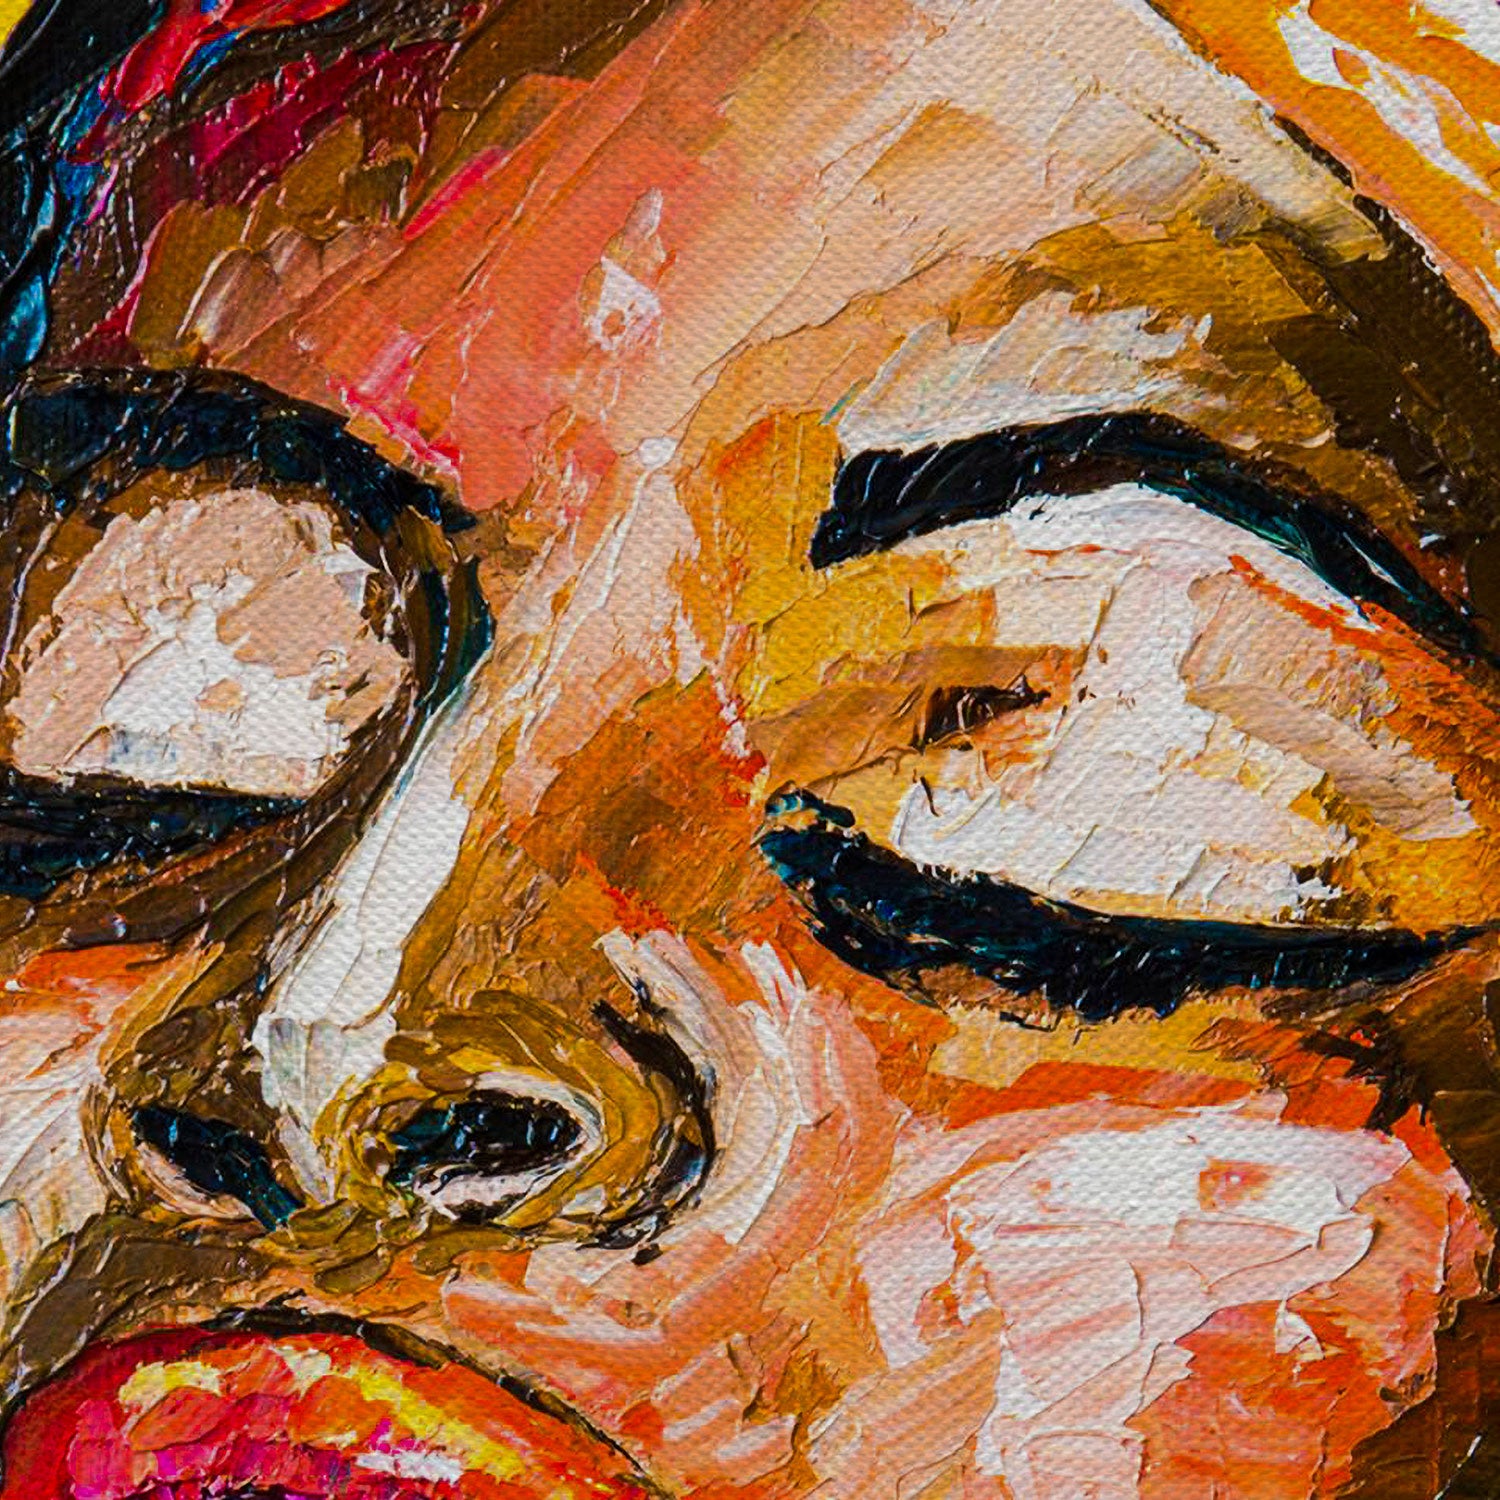 African Woman Portrait Canvas Wall Art